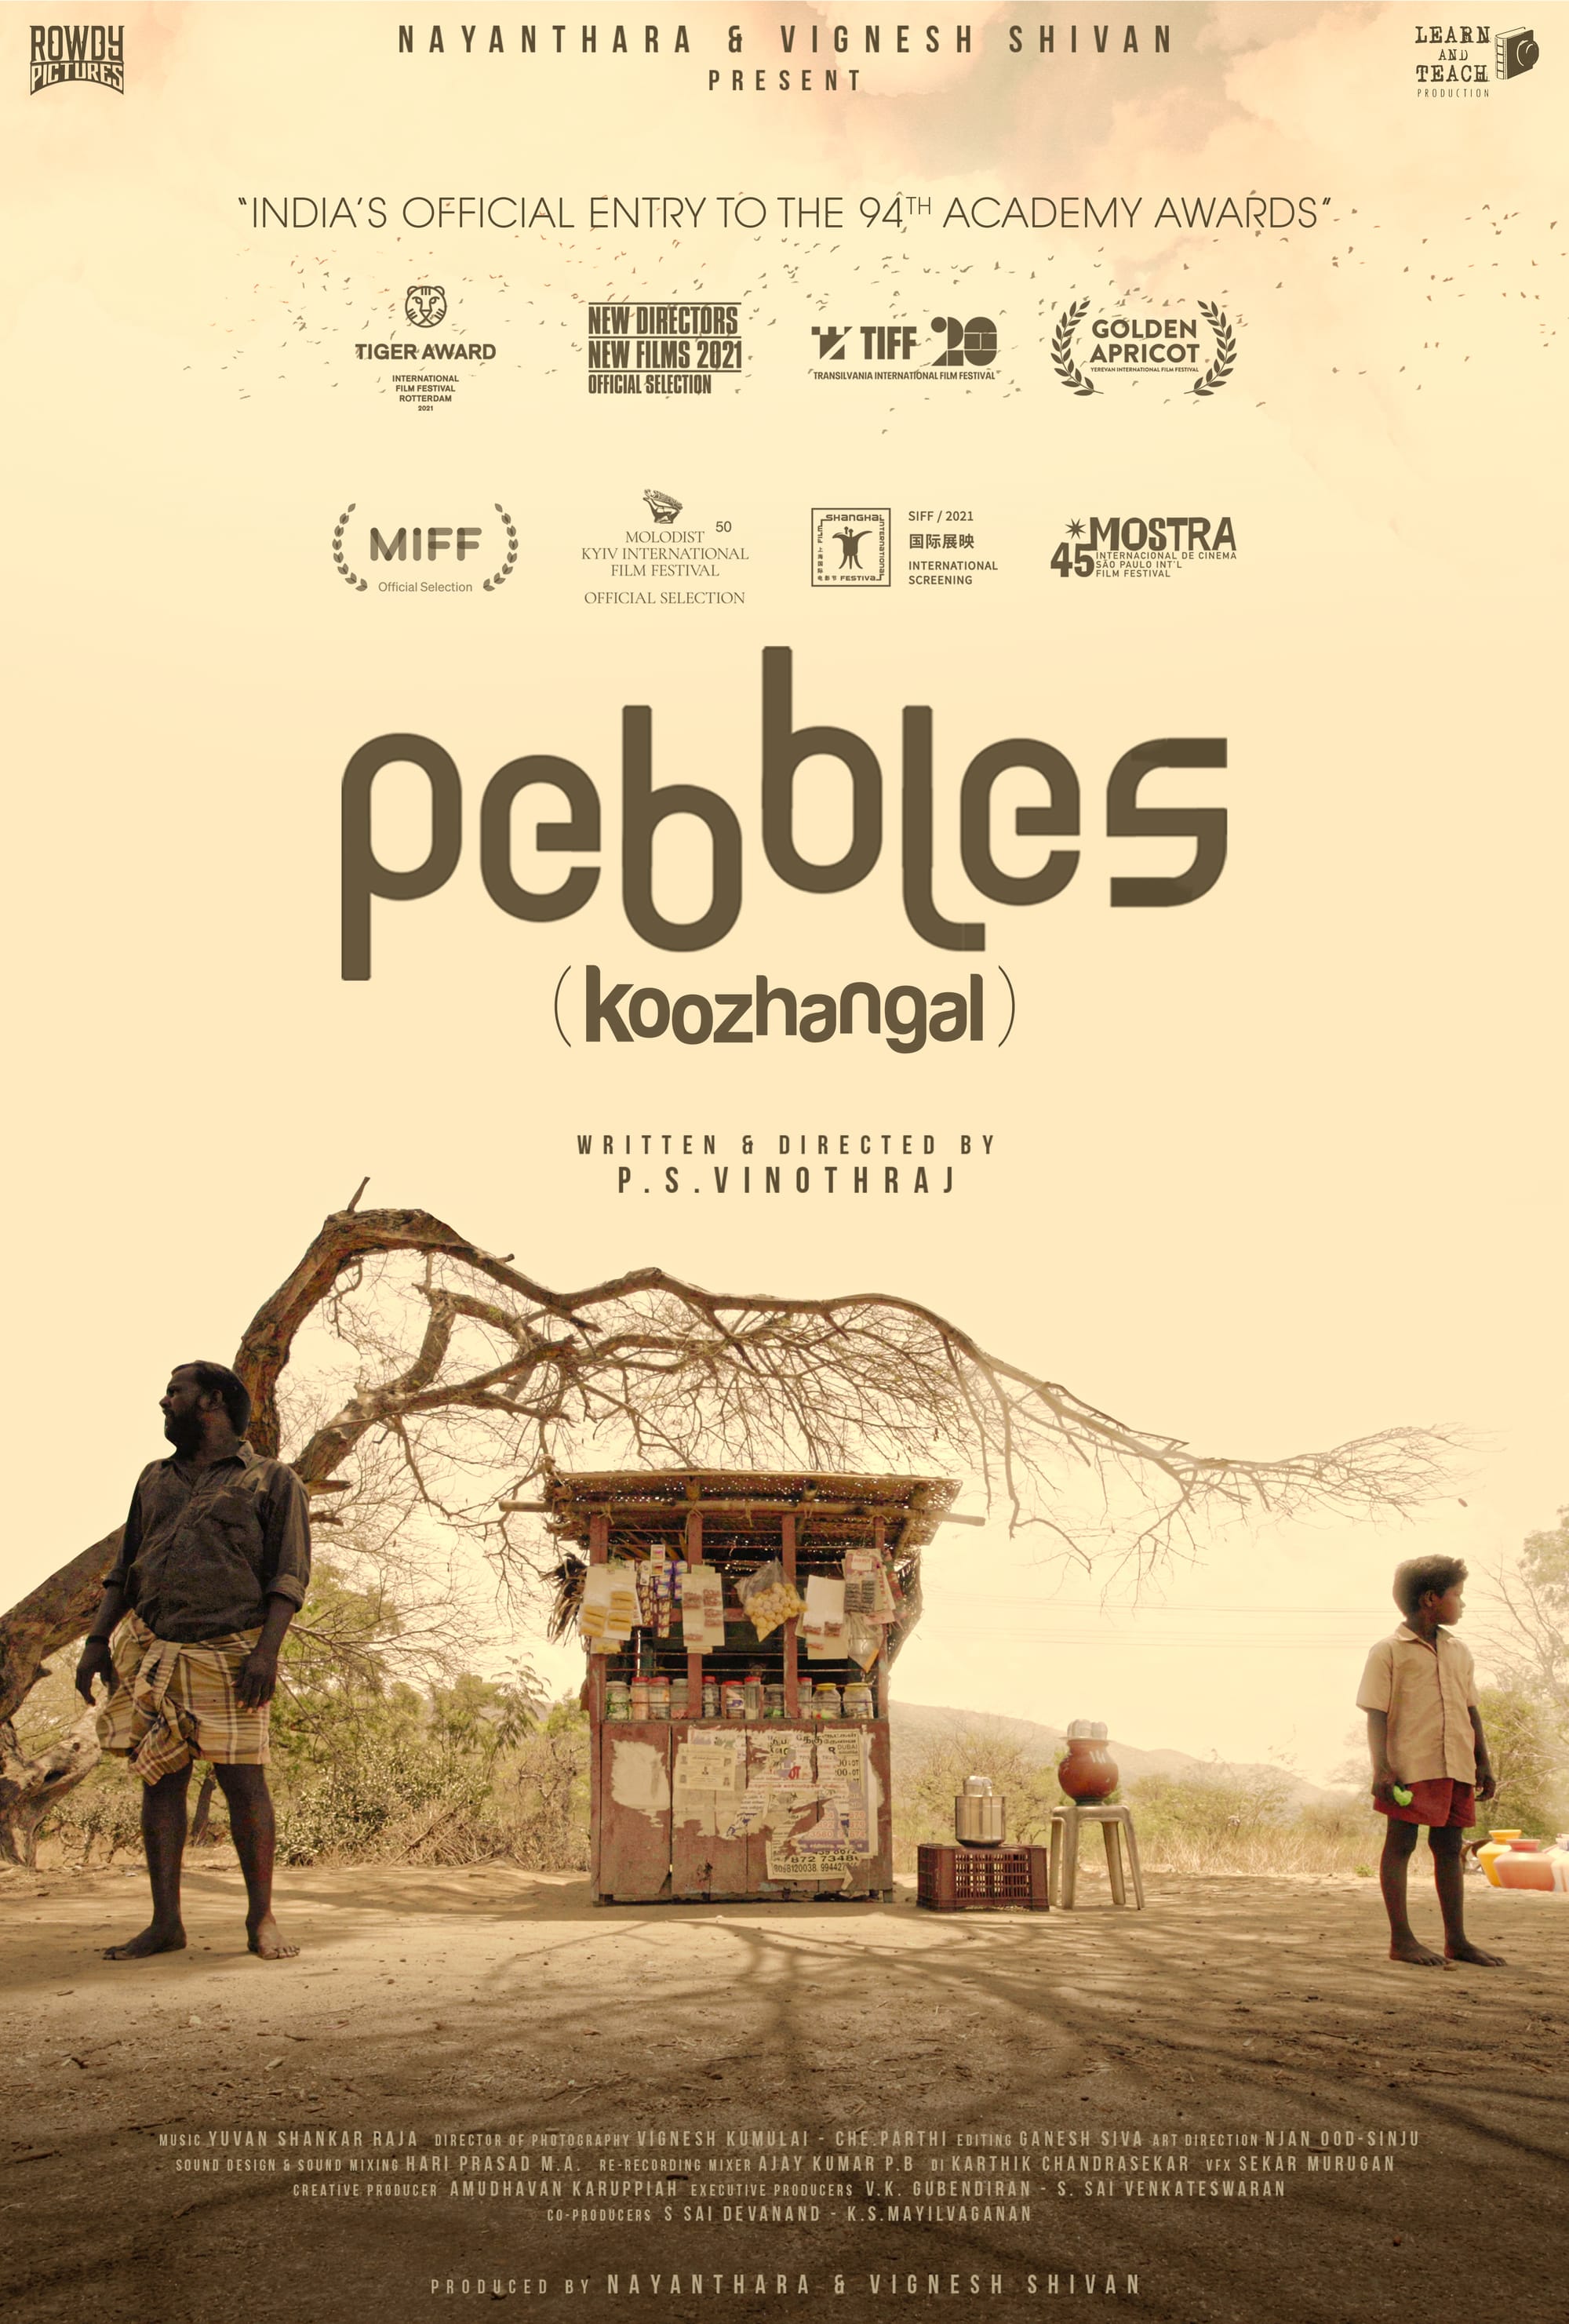 Pebbles packshot